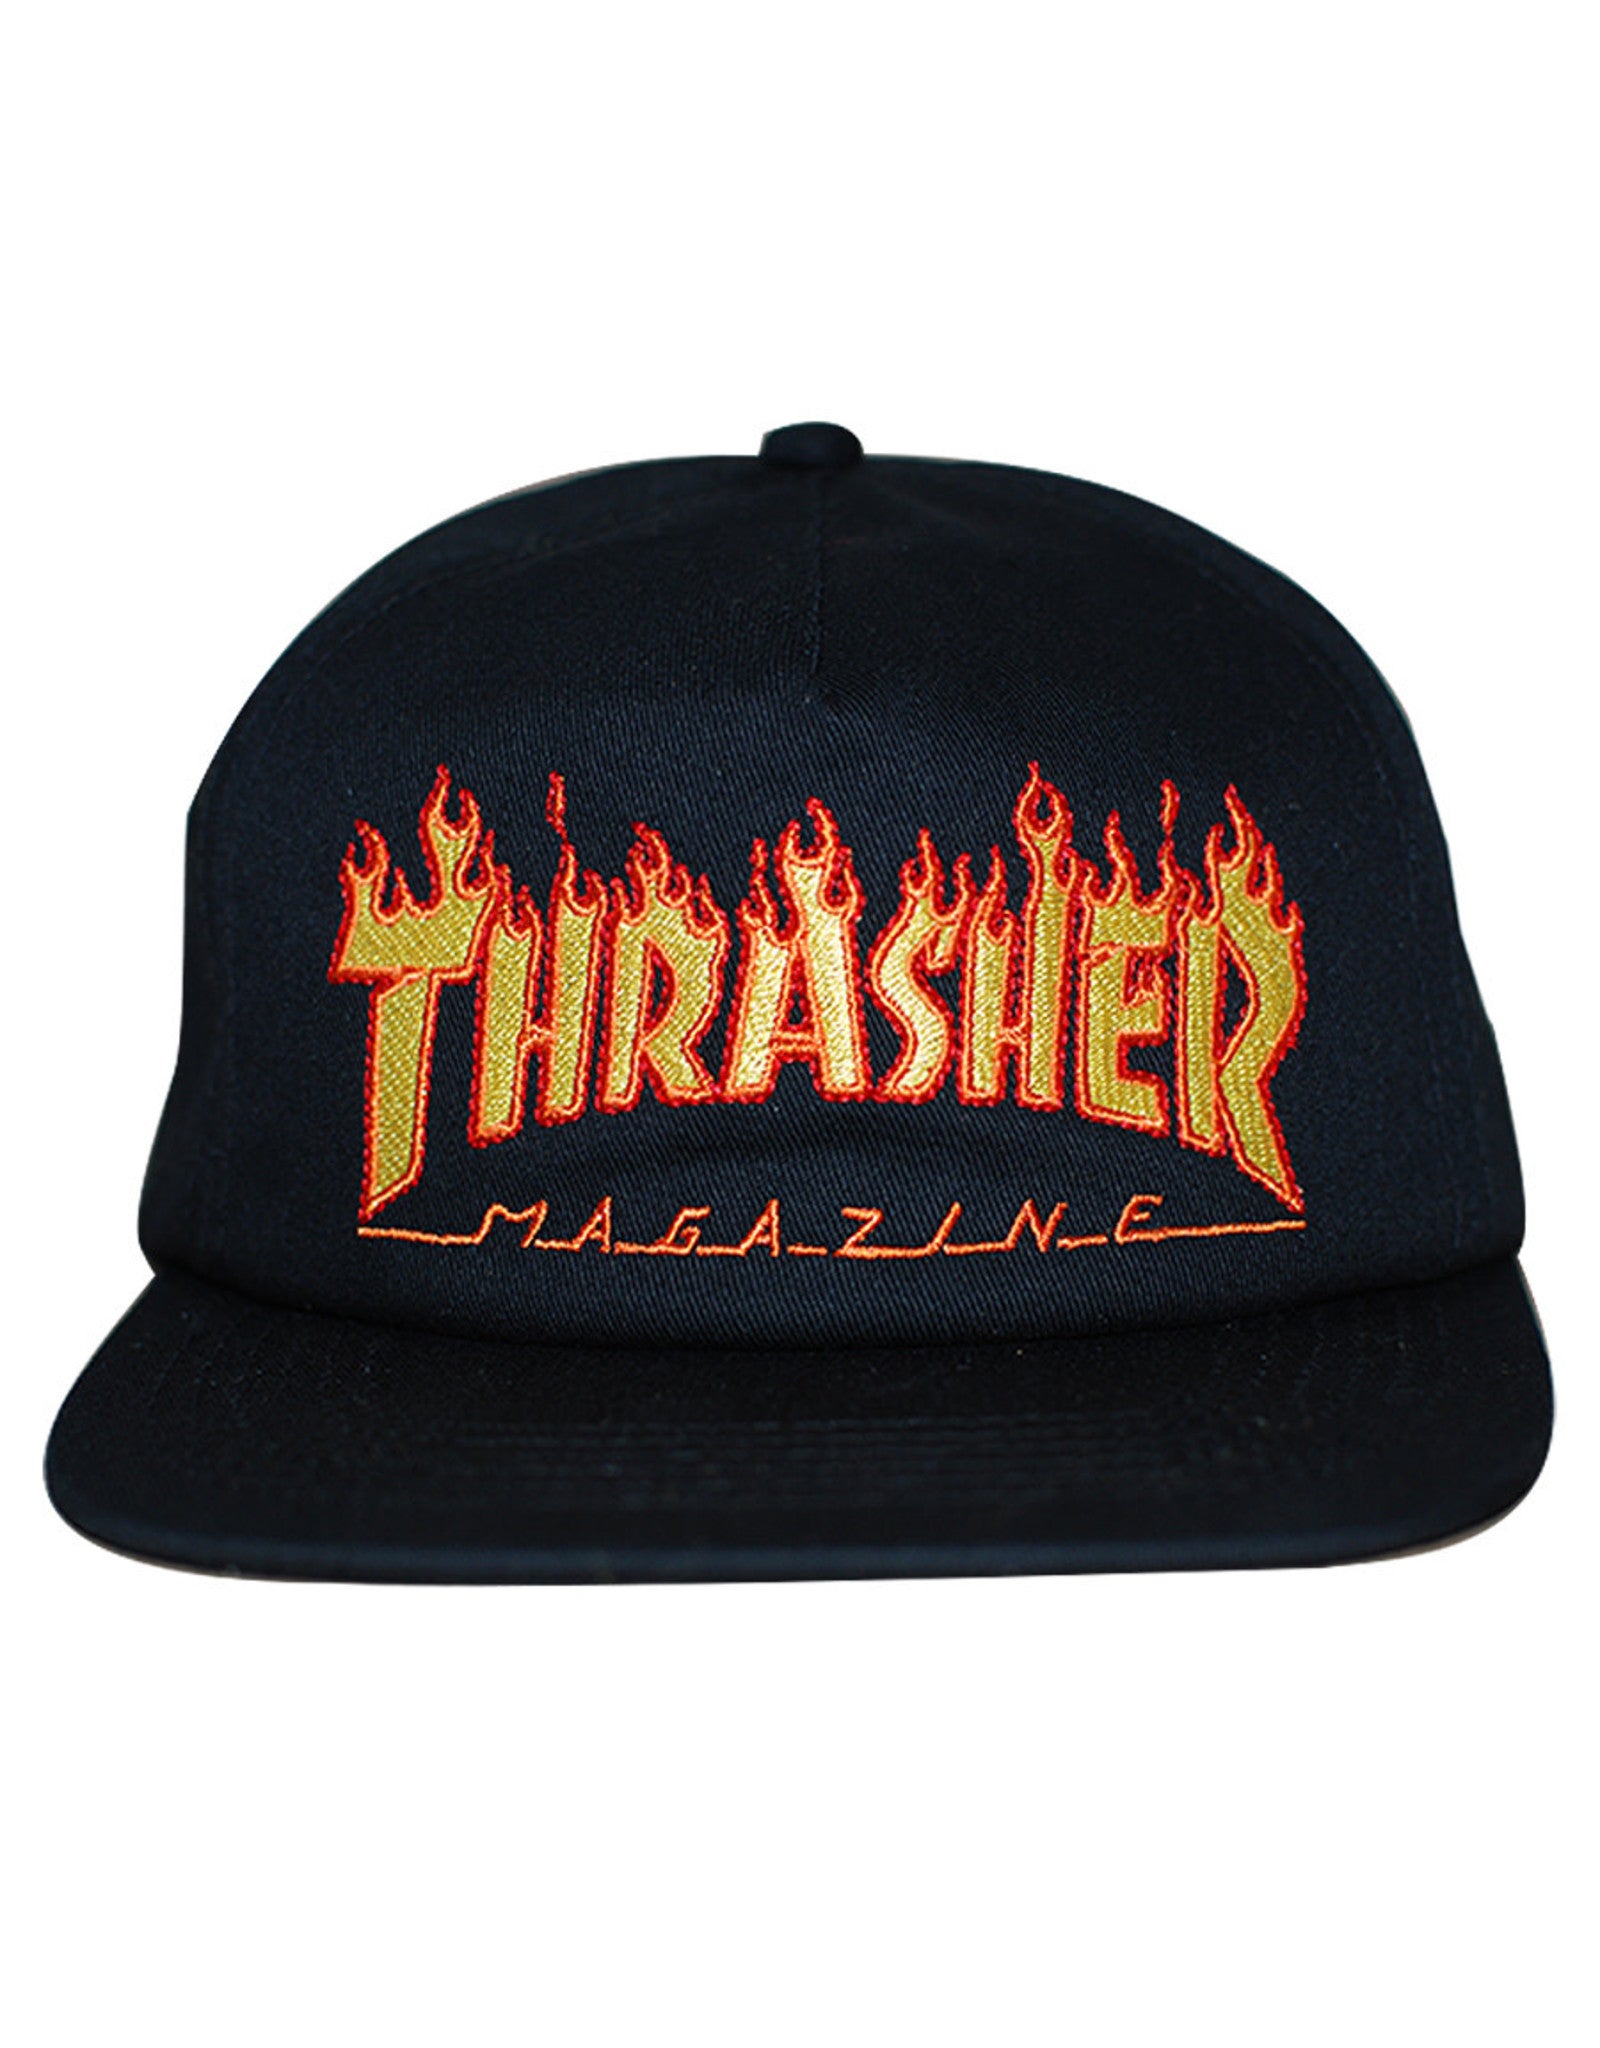 Thrasher Flame Embroidered Snapback Black